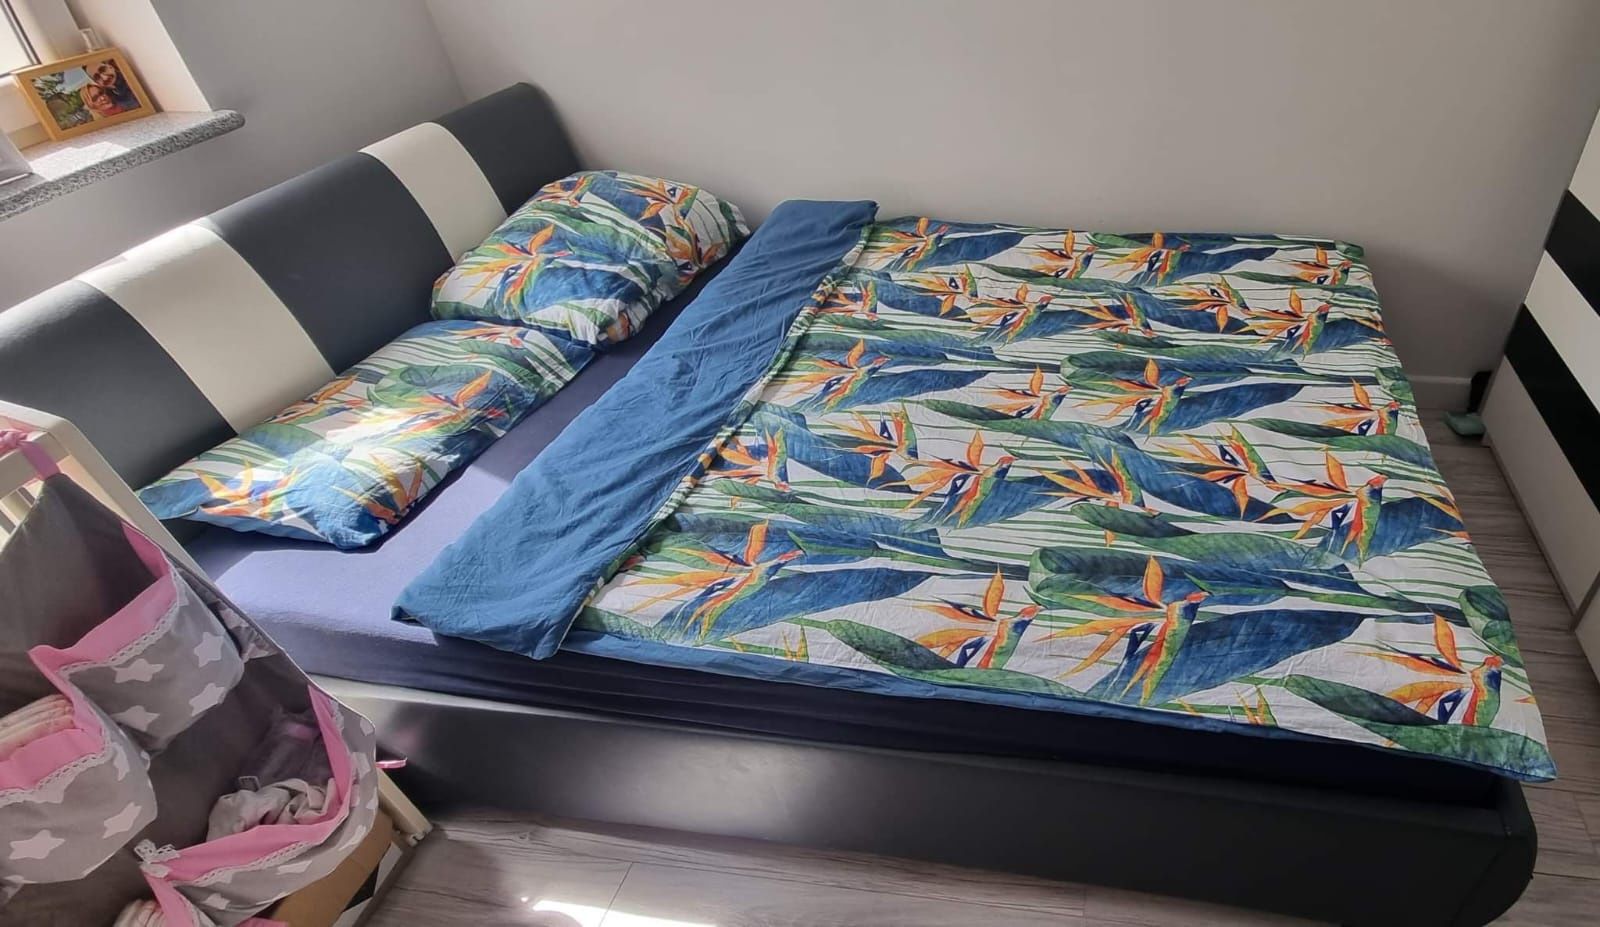 Łóżko 160x200 + materac